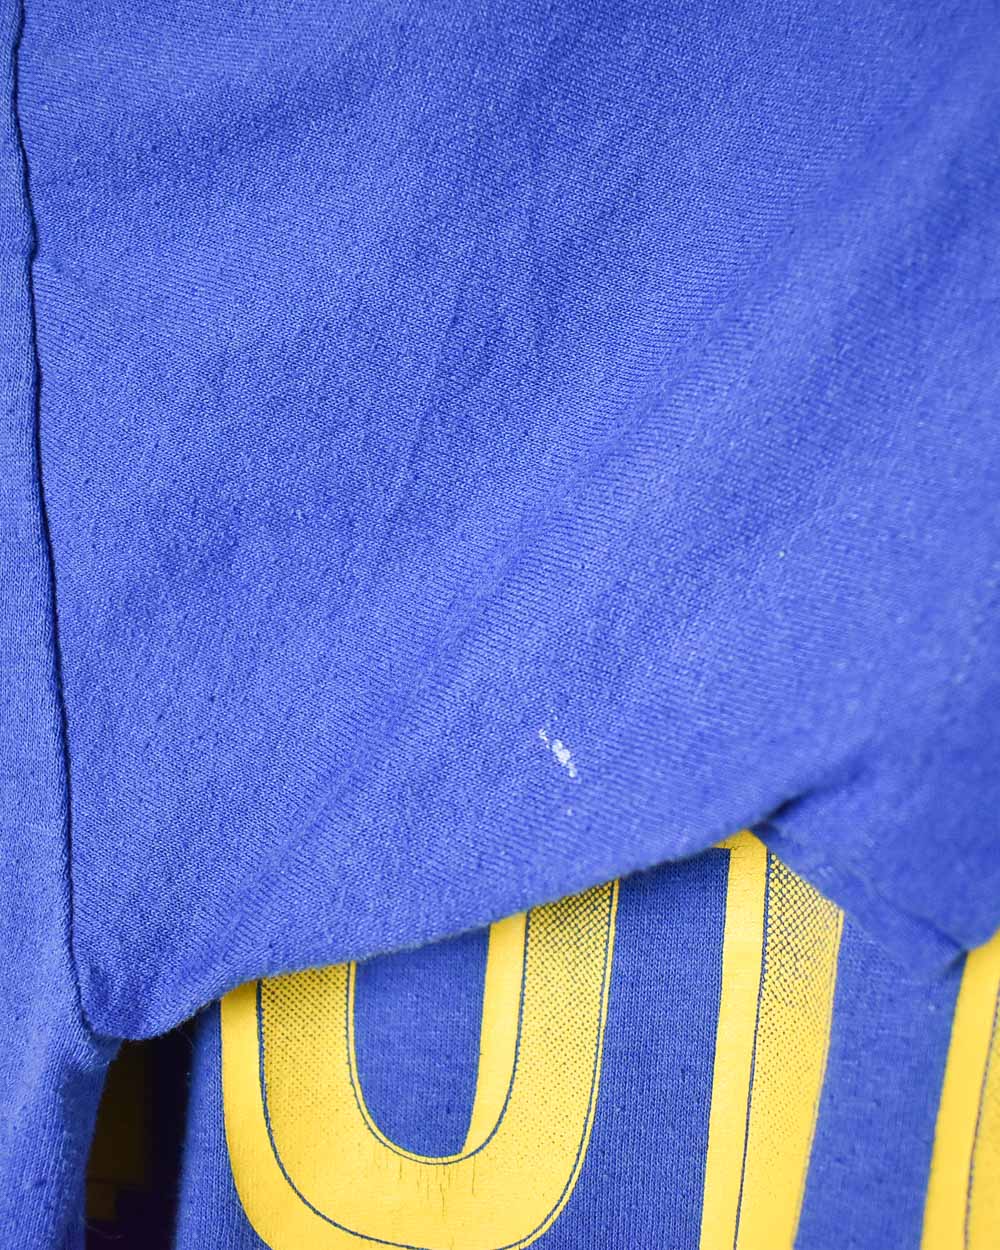 Blue Russell Athletics 46032's Future T-Shirt - Medium